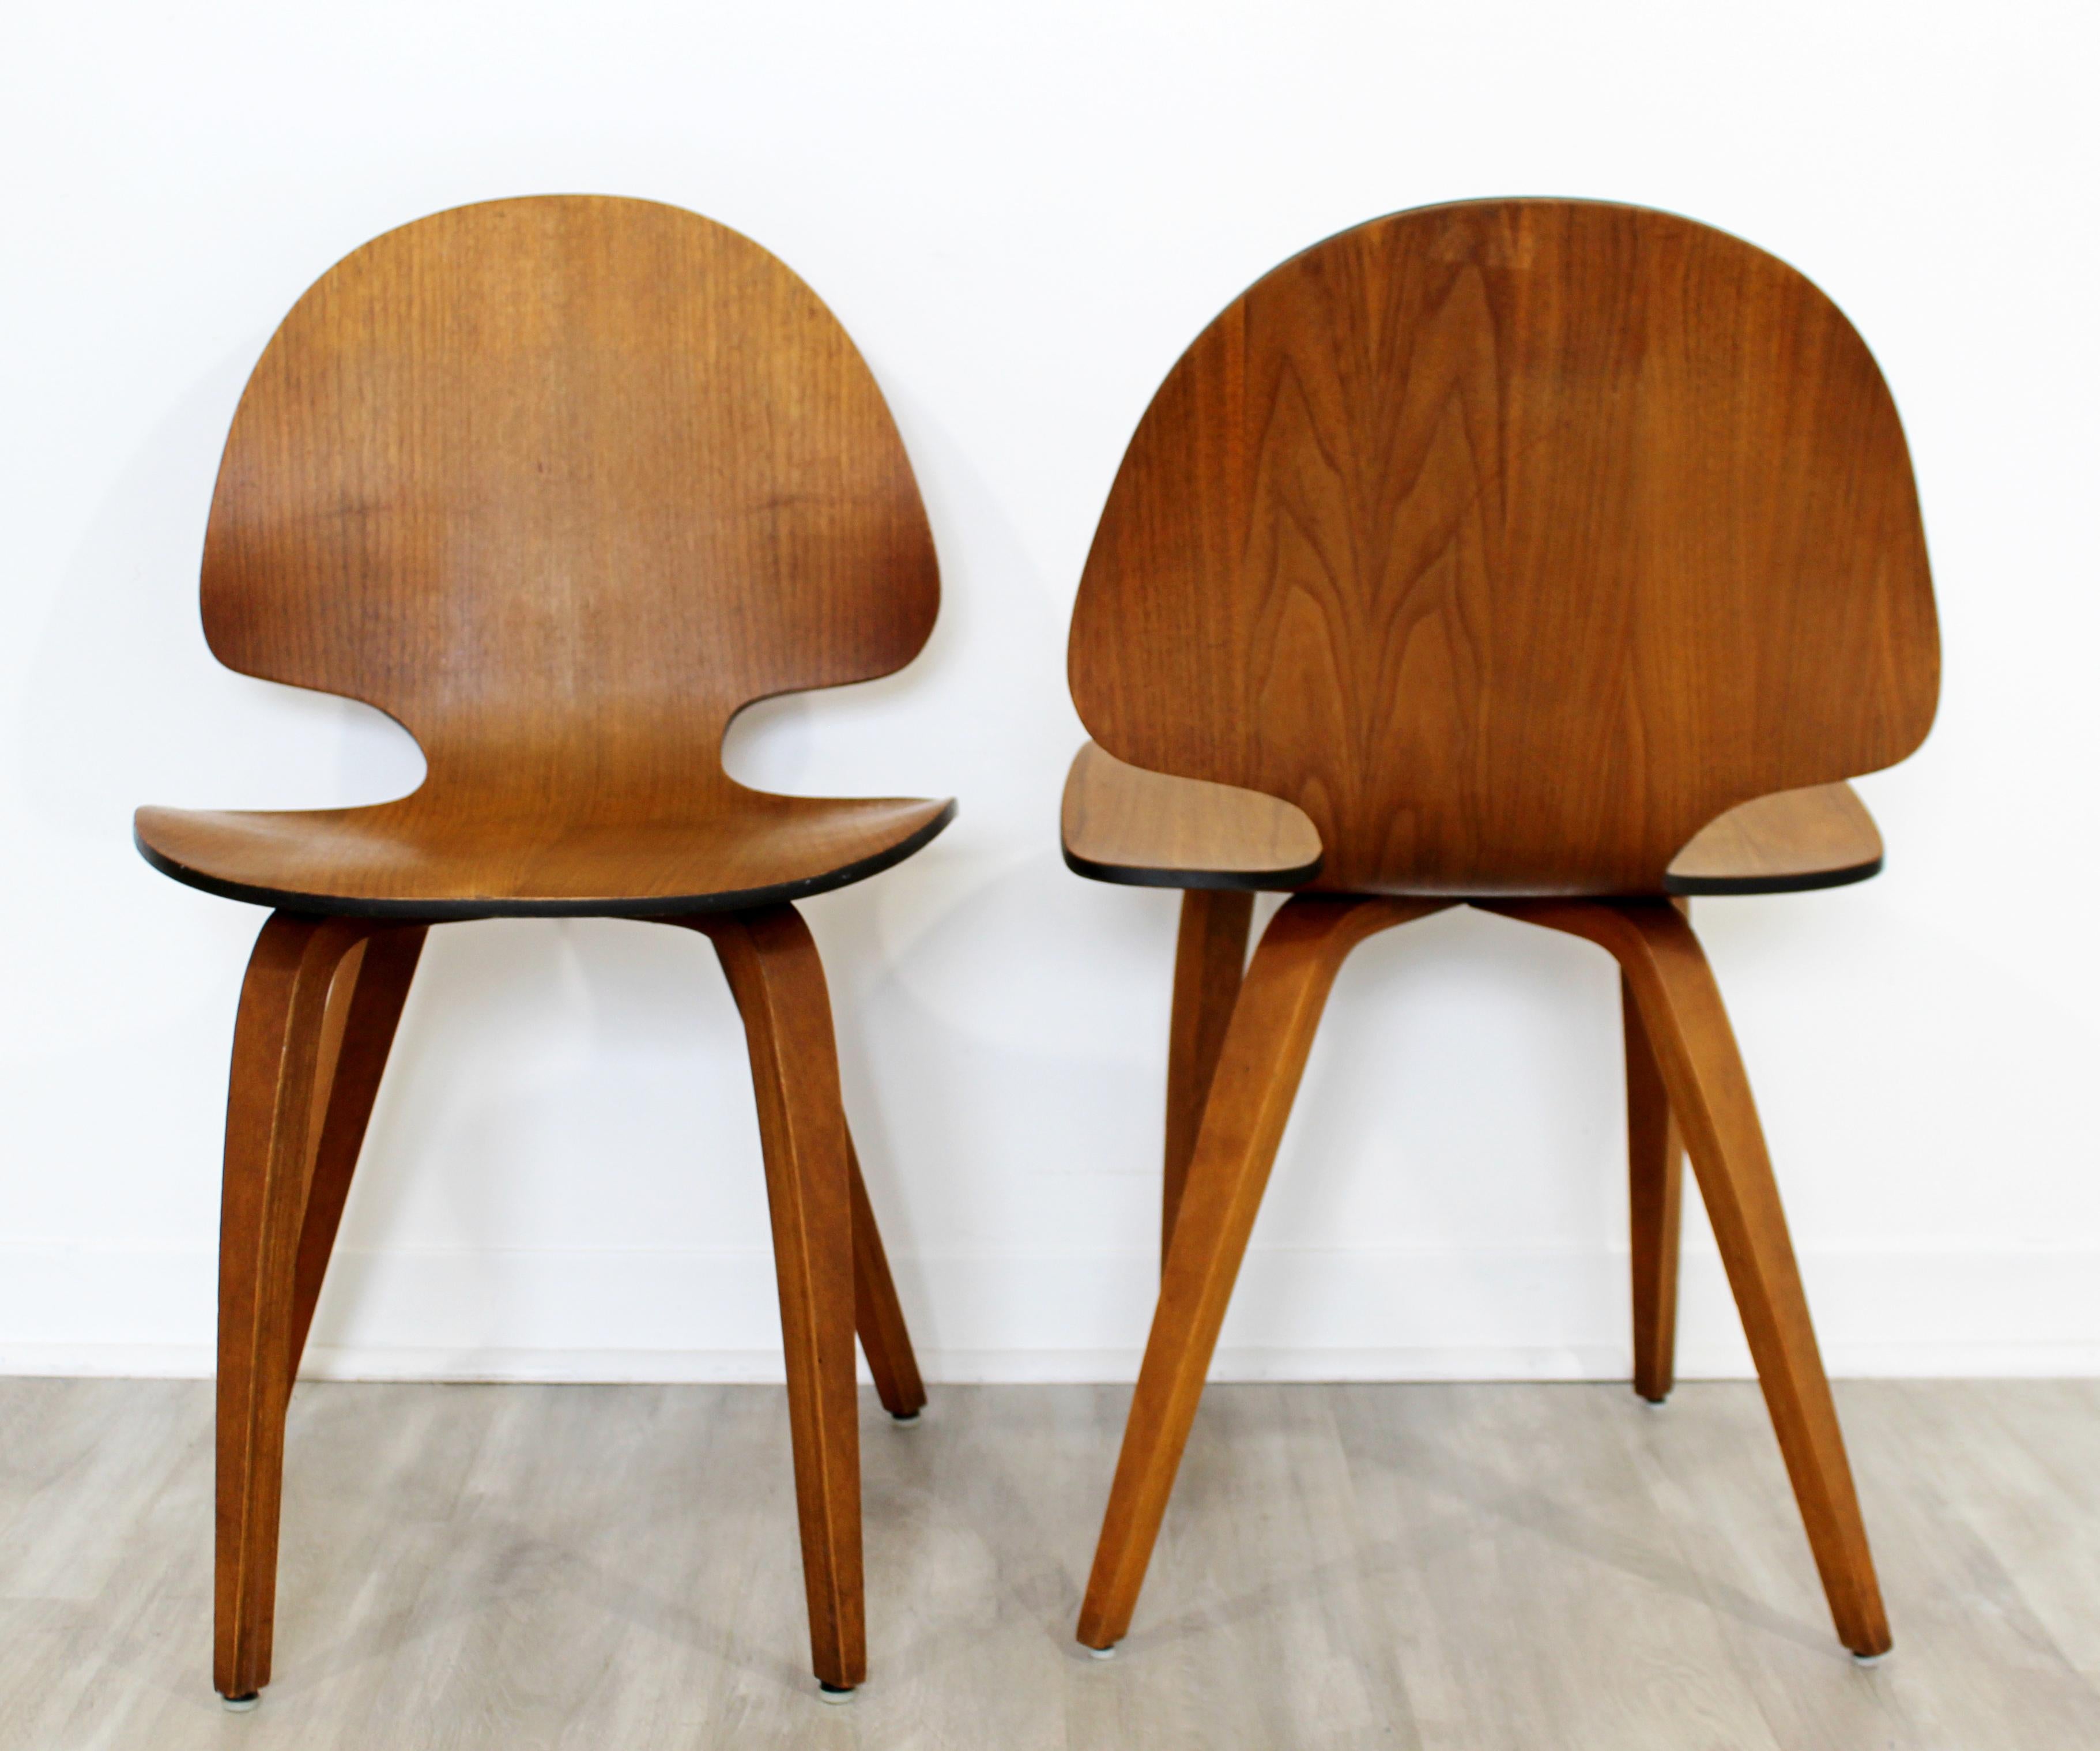 Mid-20th Century Mid-Century Modern Pair of Curved Bent Teak Wood Side Chairs Fritz Hansen Era